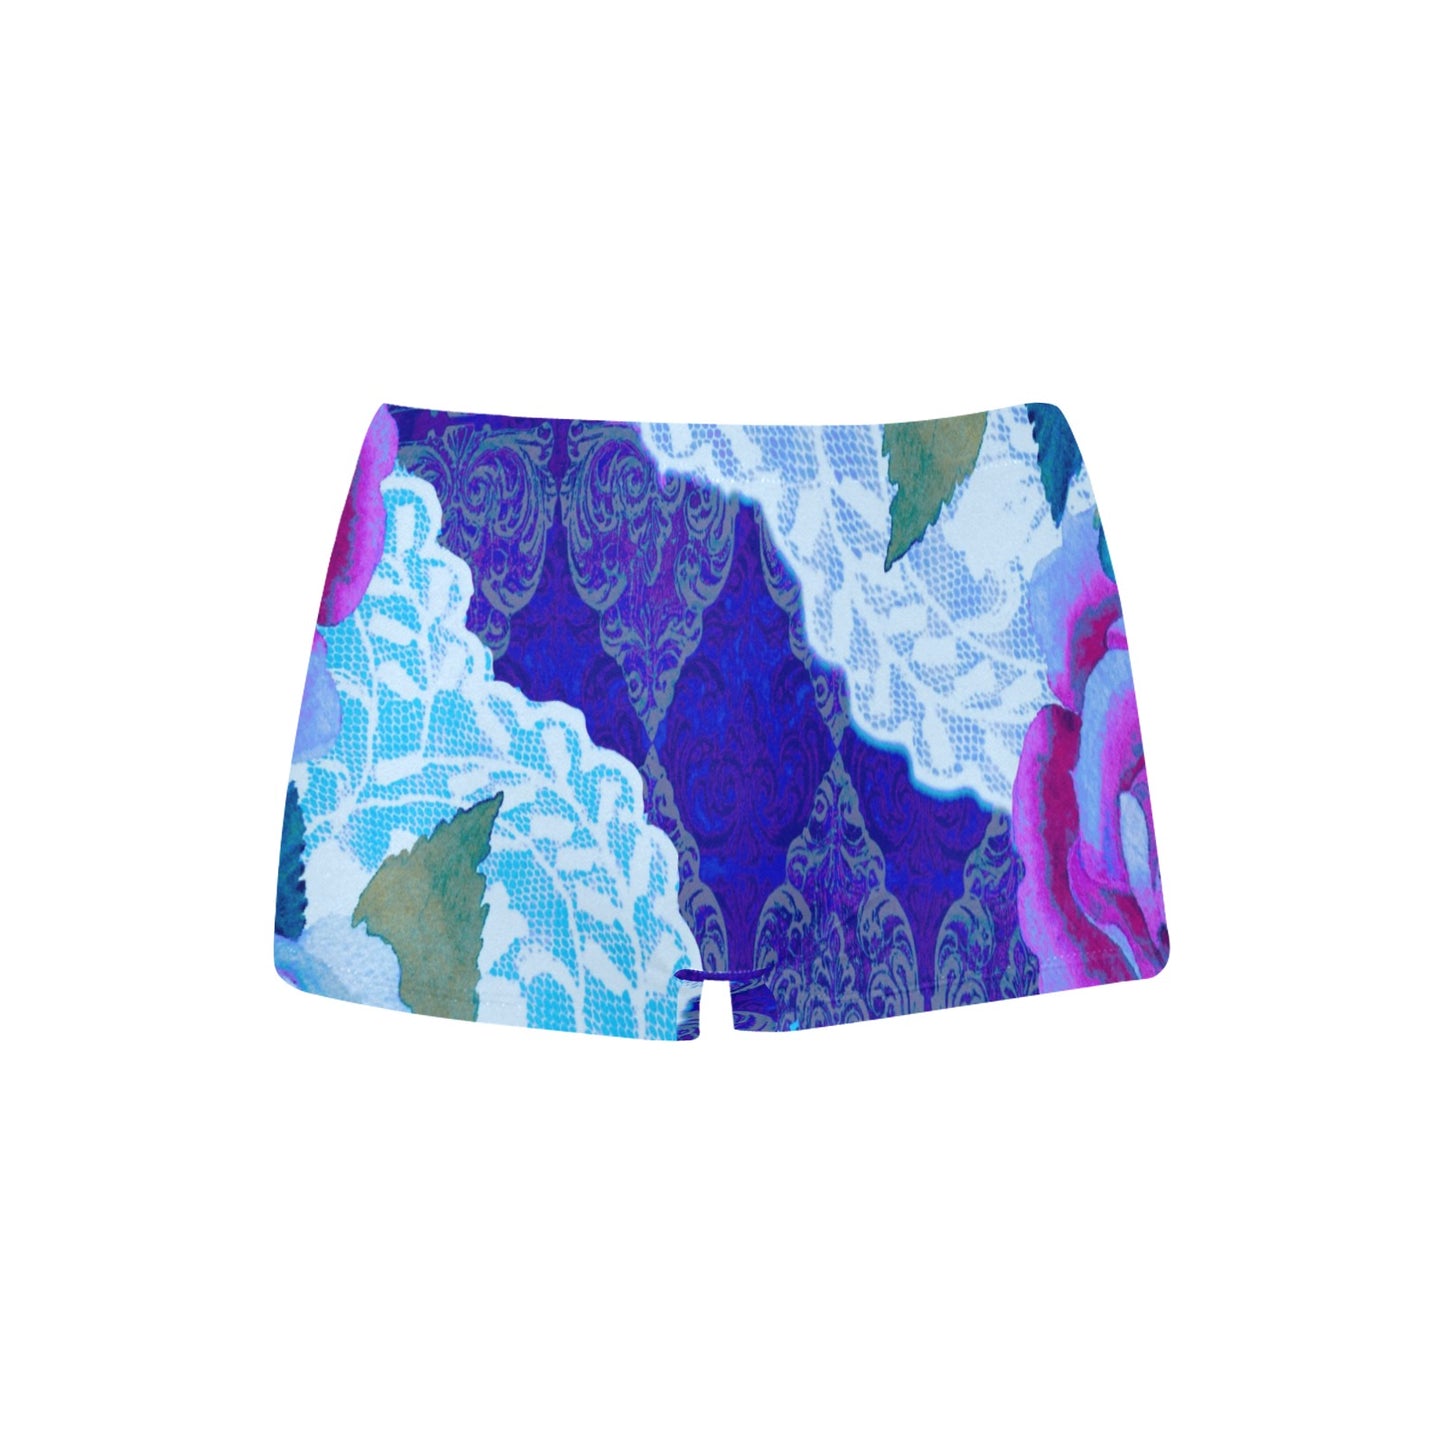 Printed Lace Boyshorts, daisy dukes, pum pum shorts, shortie shorts , design 20